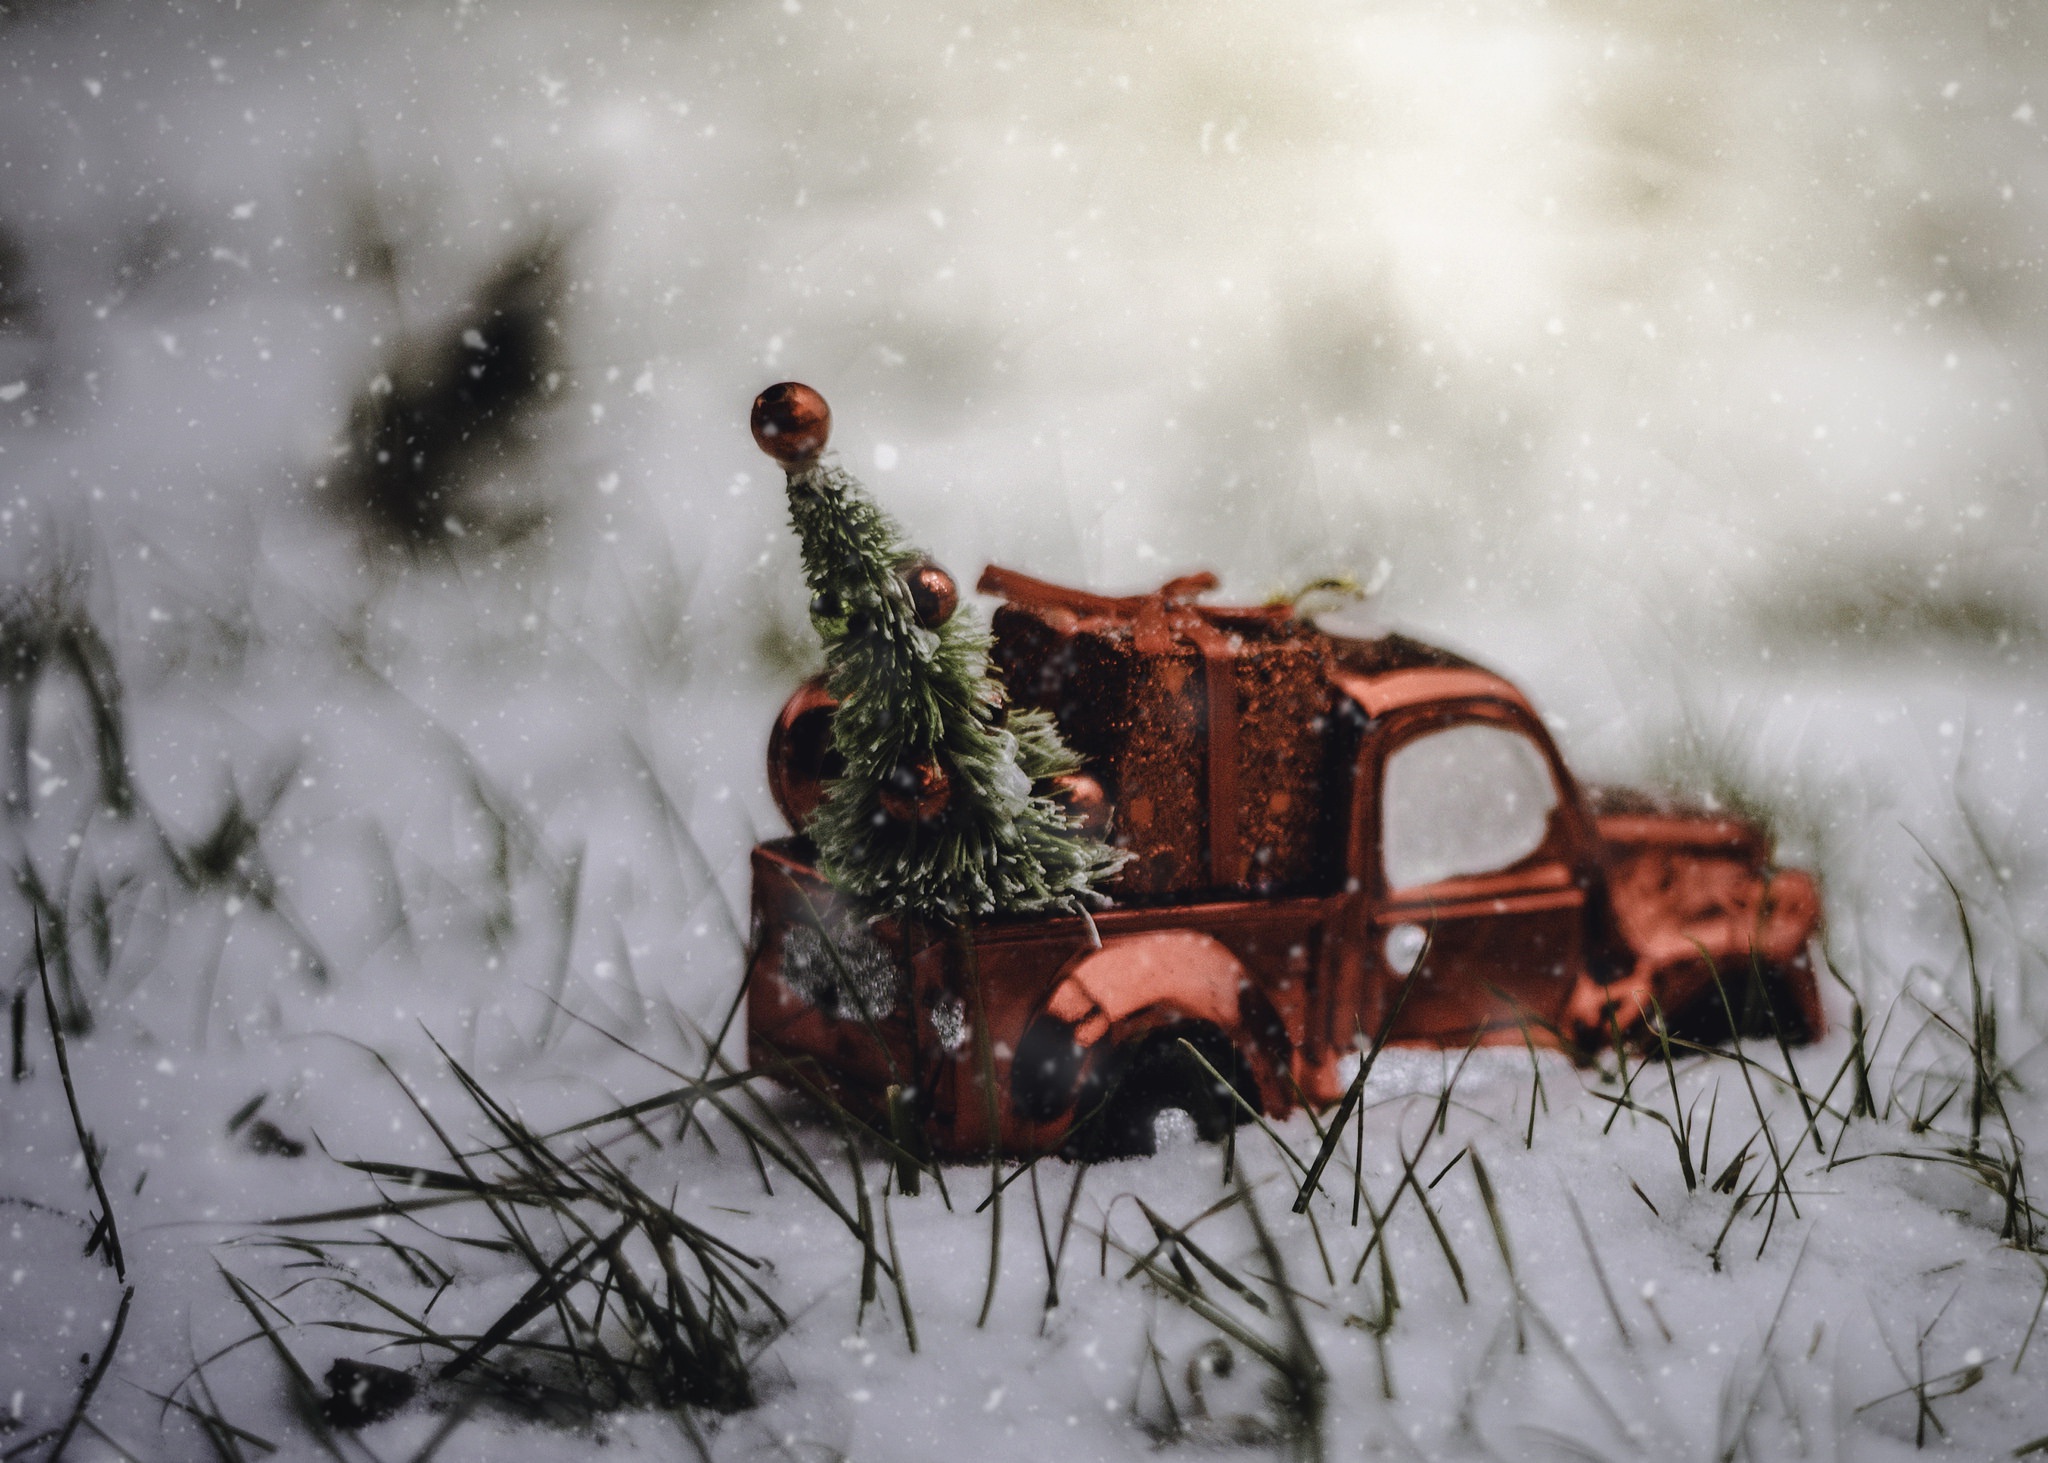 General 2048x1463 toys car snow Christmas snowing Christmas tree